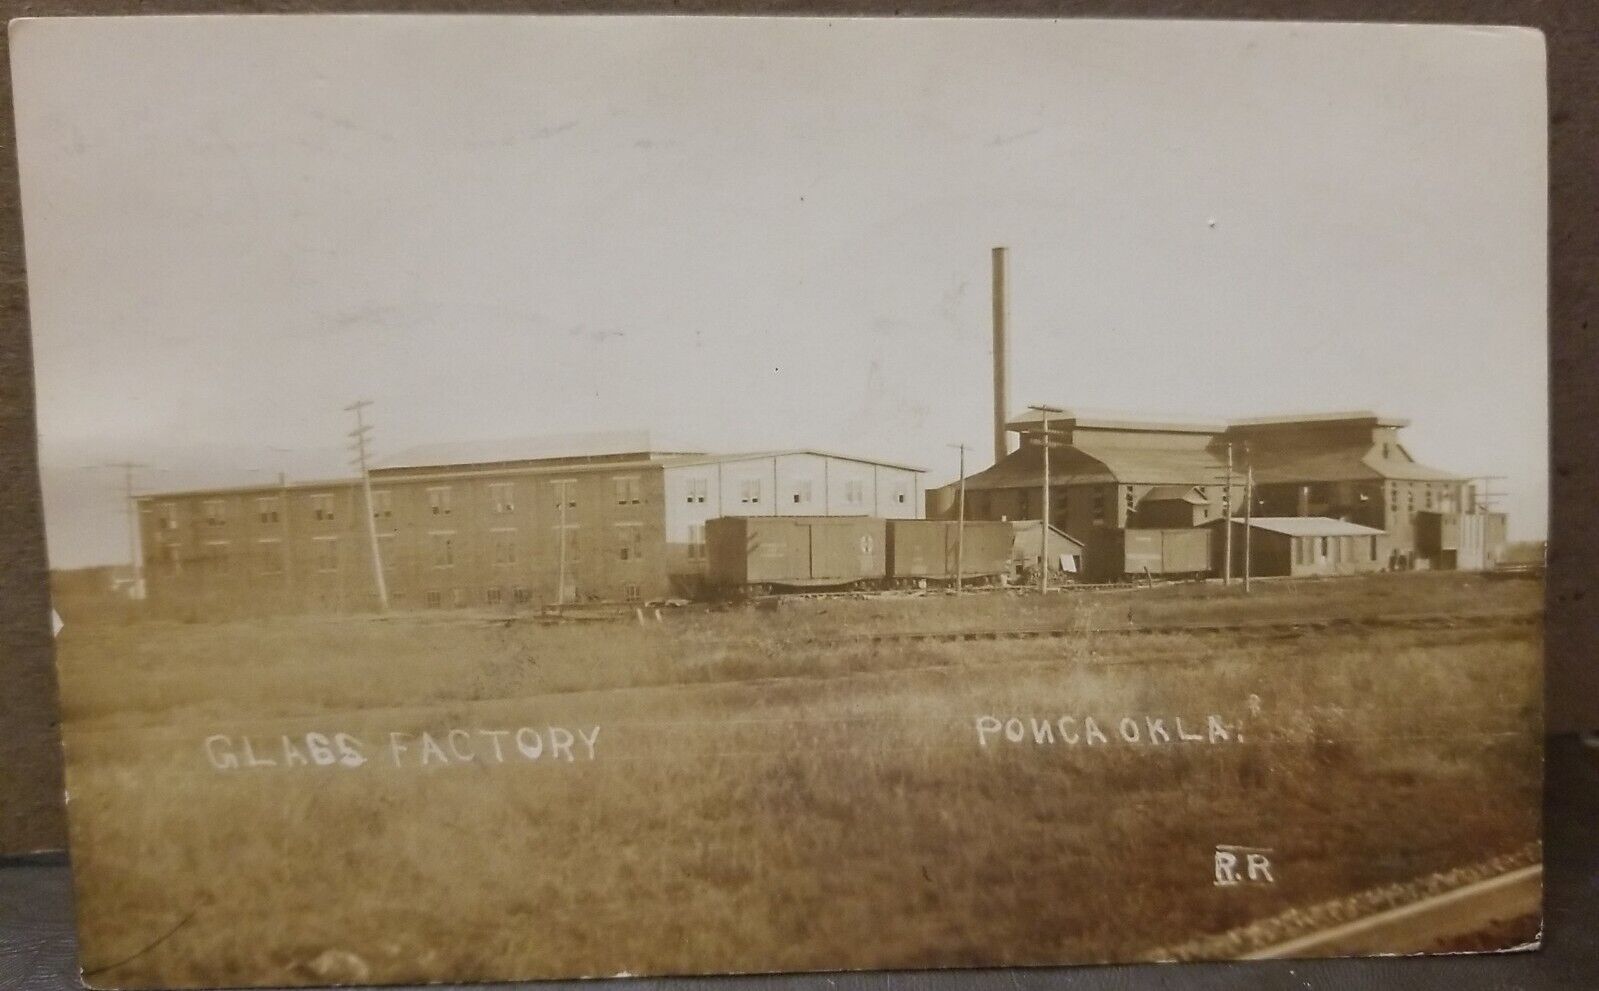 GLASS FACTORY Ponca Oklahoma Real Photo Postcard RPPC  Postmarked 1912